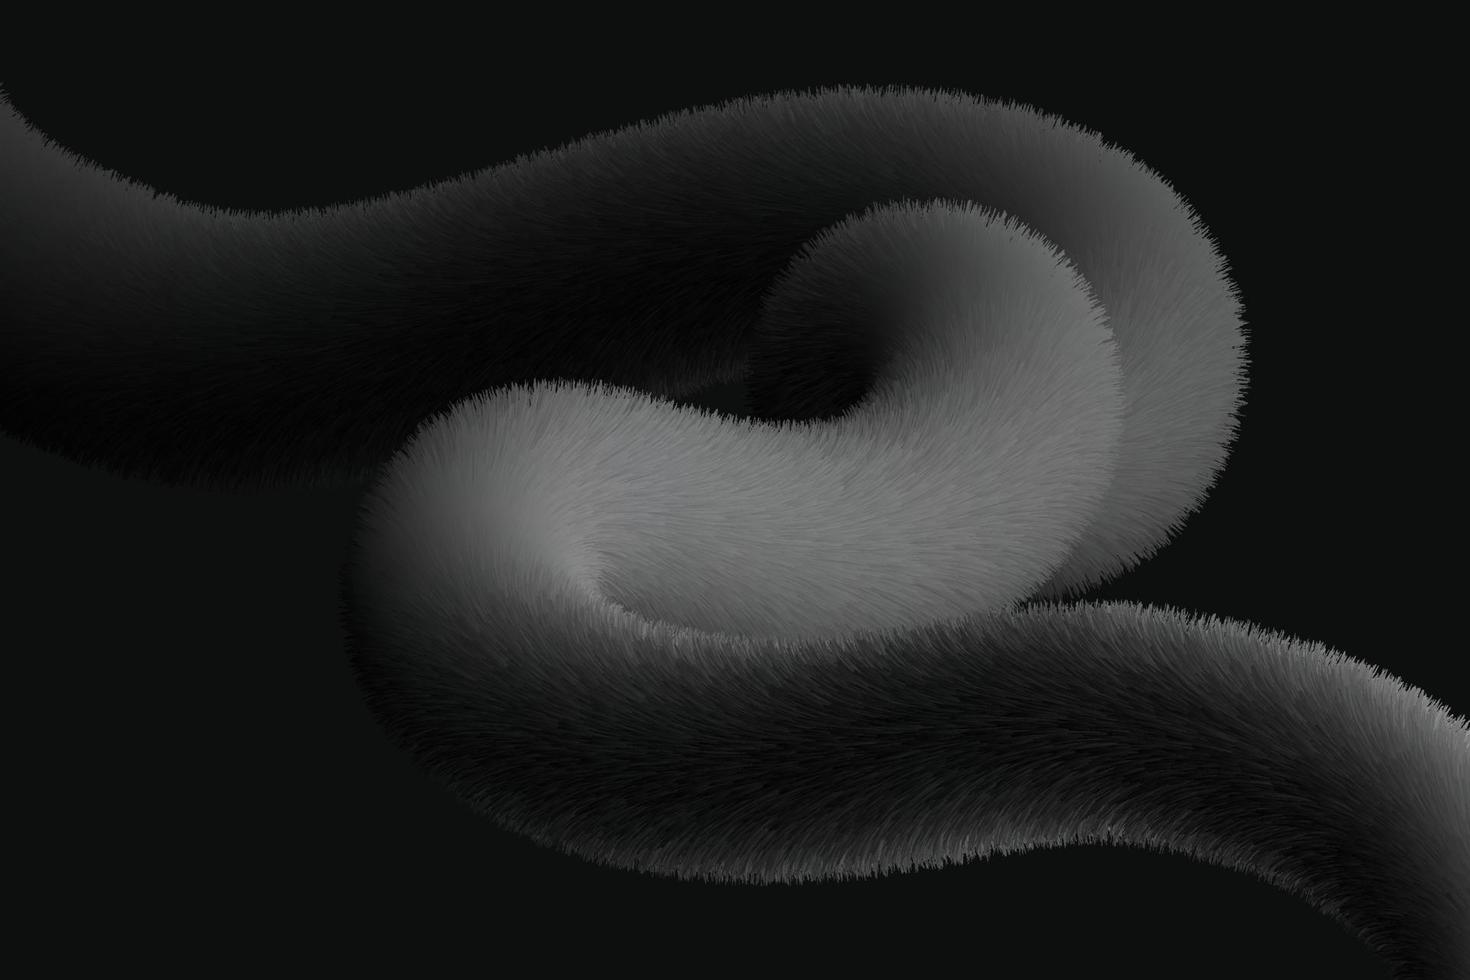 anbud hårig svart flytande form bakgrund. fluffig abstrakt vriden linje illustration vektor